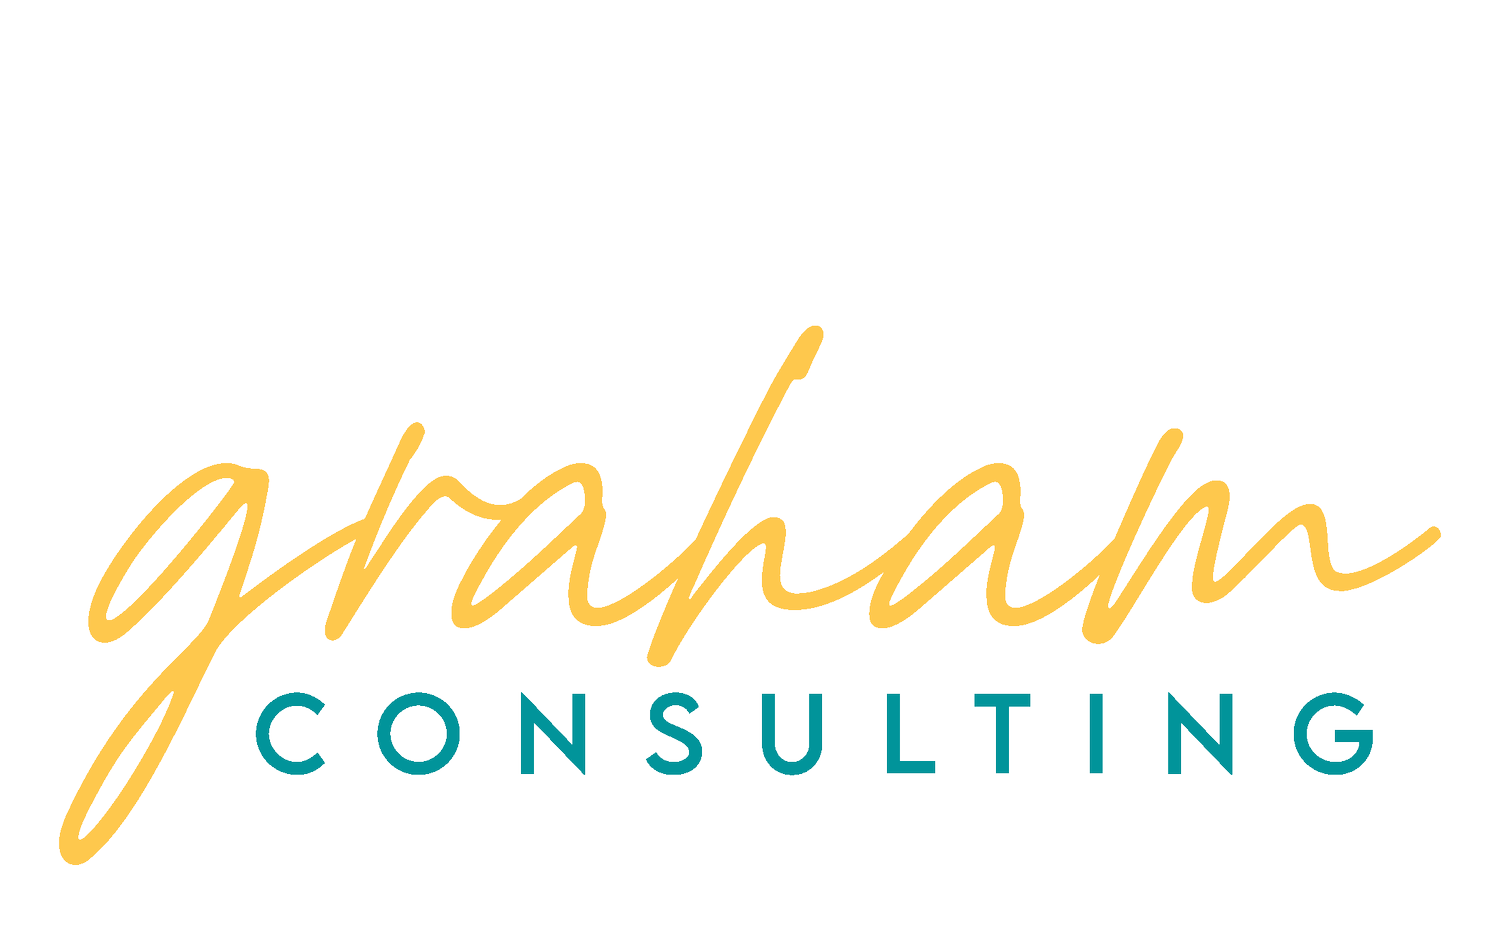 Karen Graham Consulting